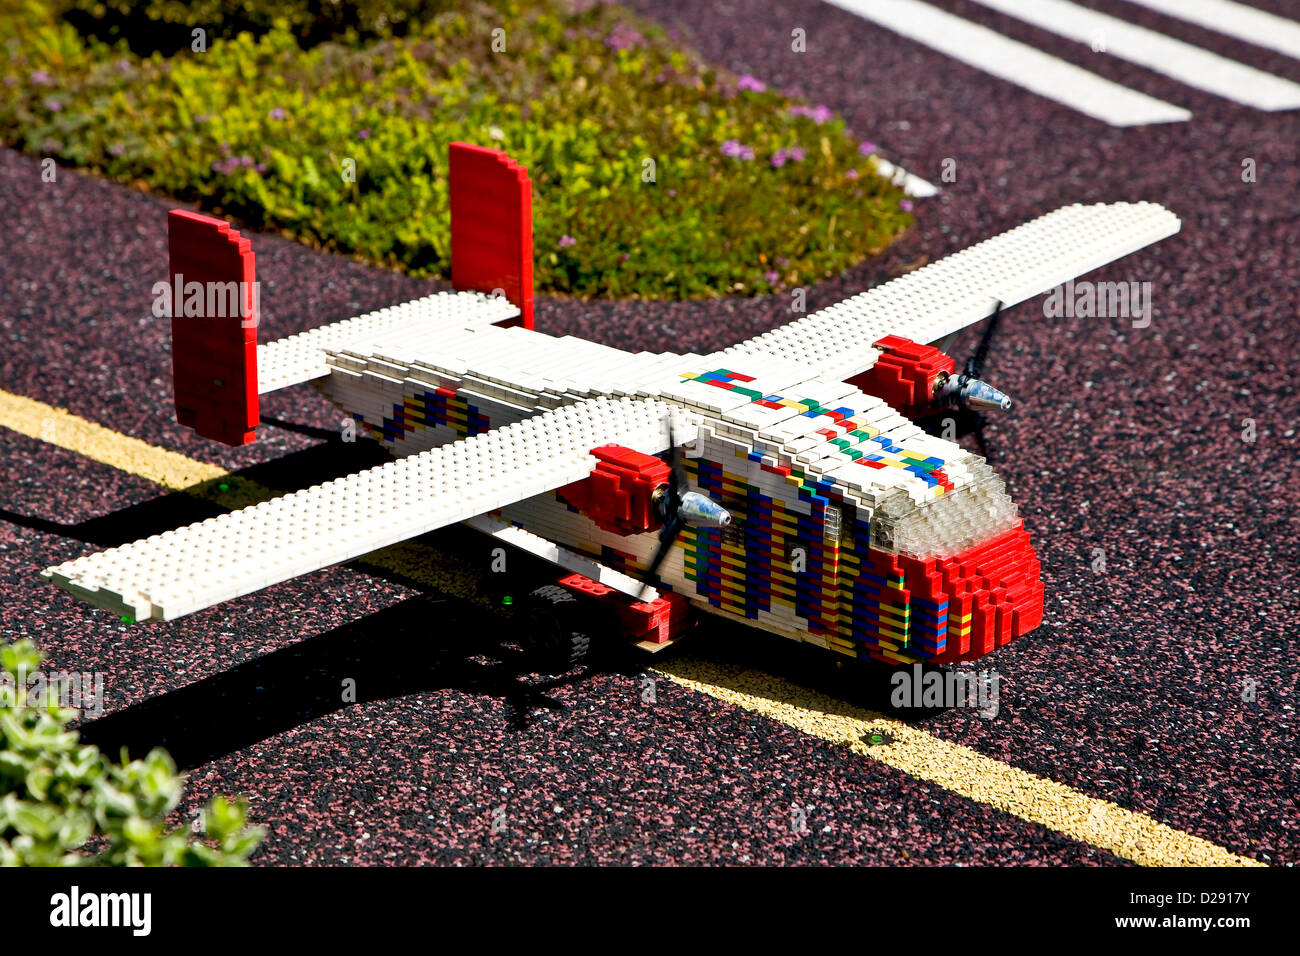 Aeroplane made from lego bricks Stock Photo